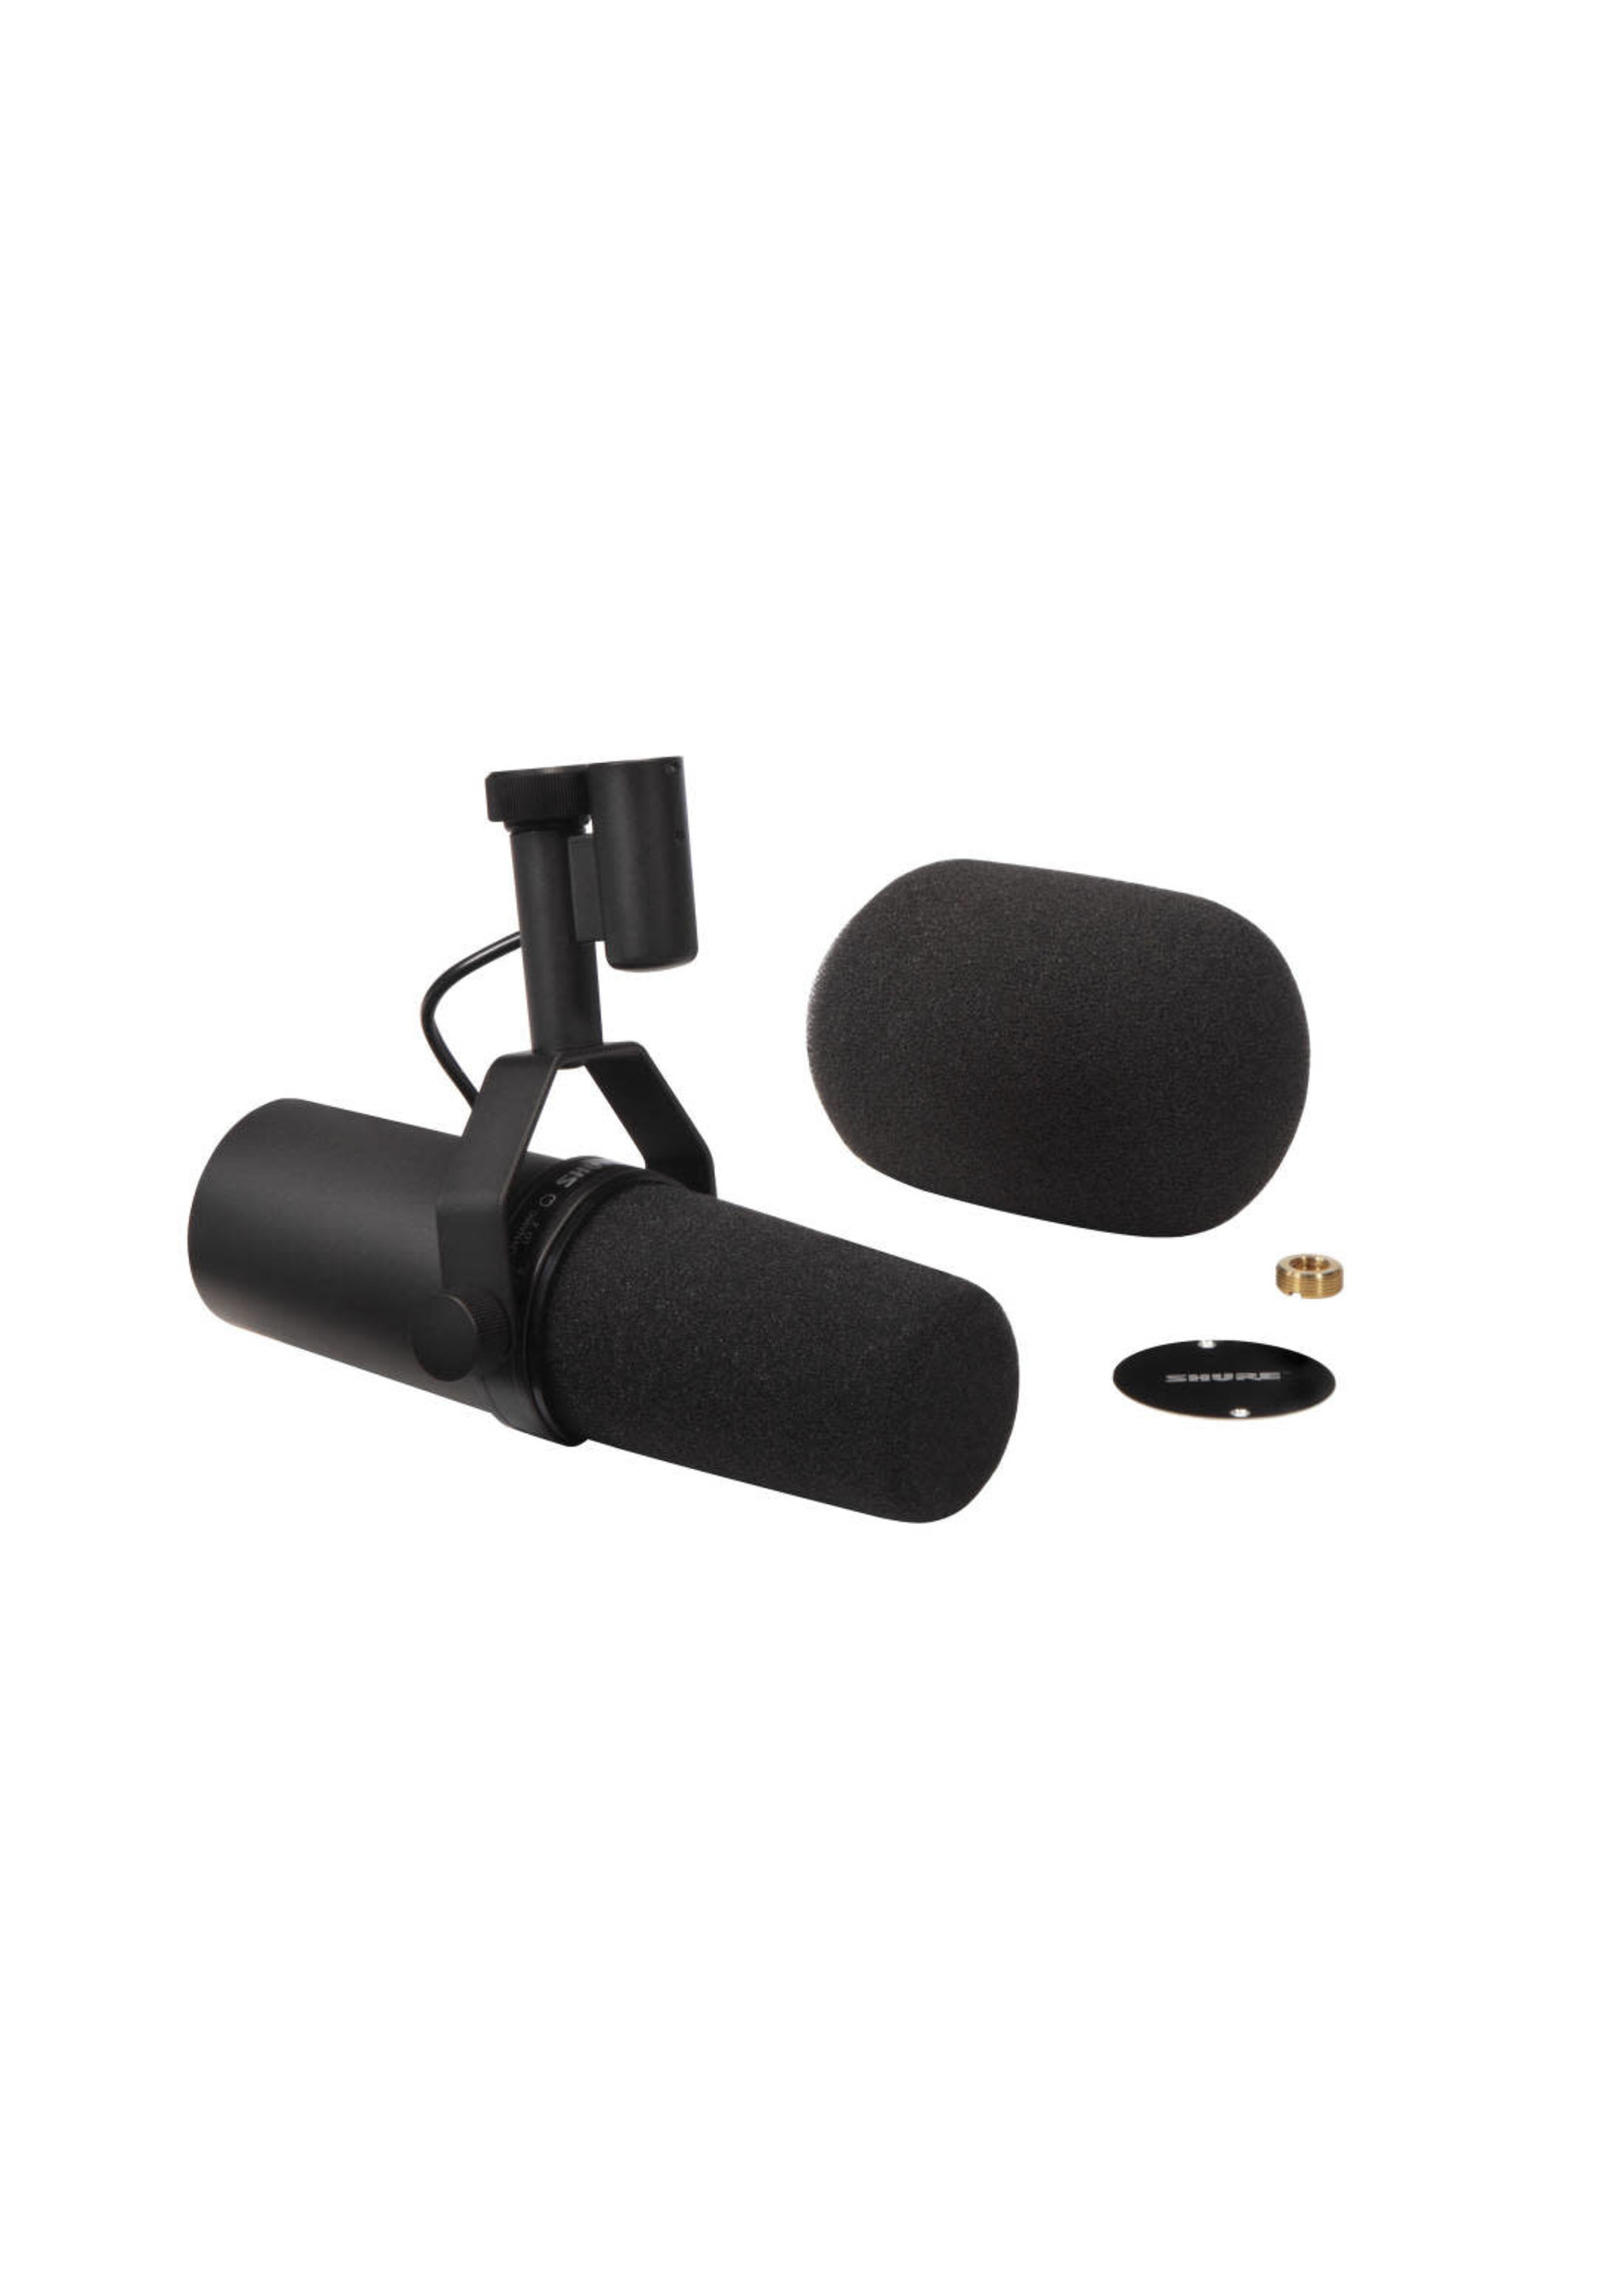 Shure SM7B Large Diaphragm Cardioid Dynamic Microphone - The Gear Box